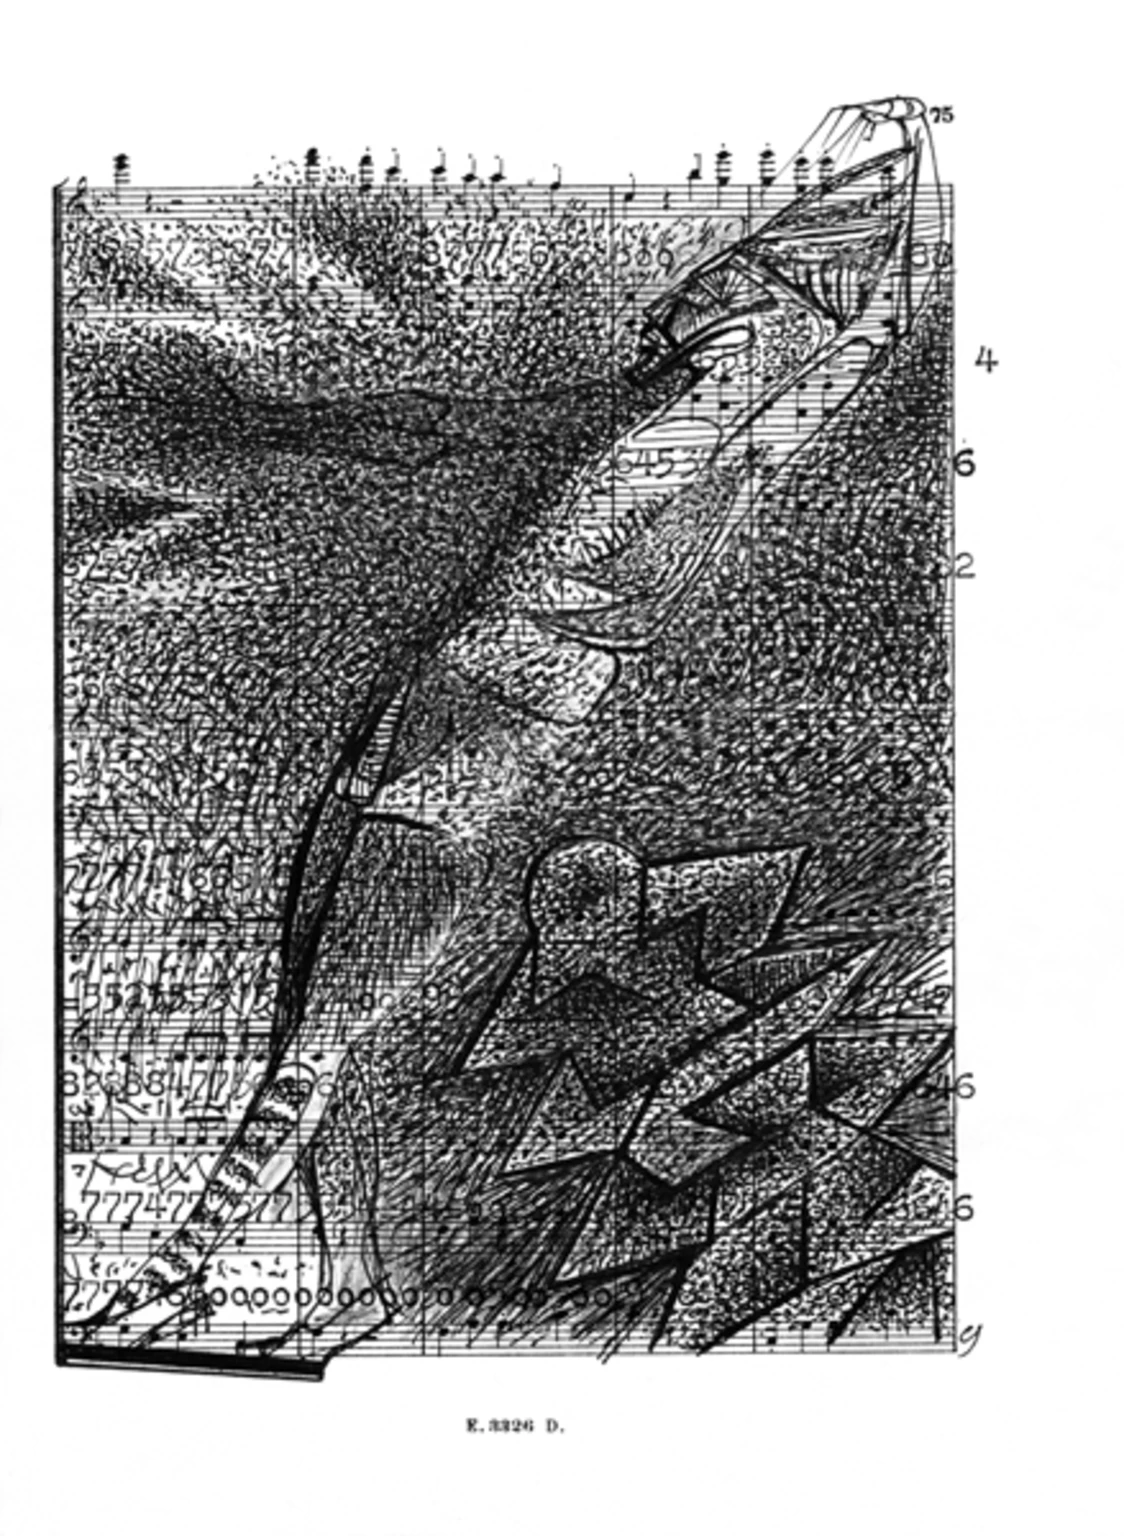 Tanulmány kottára IV., 1990 - papír, tus, 22 x 16 cm